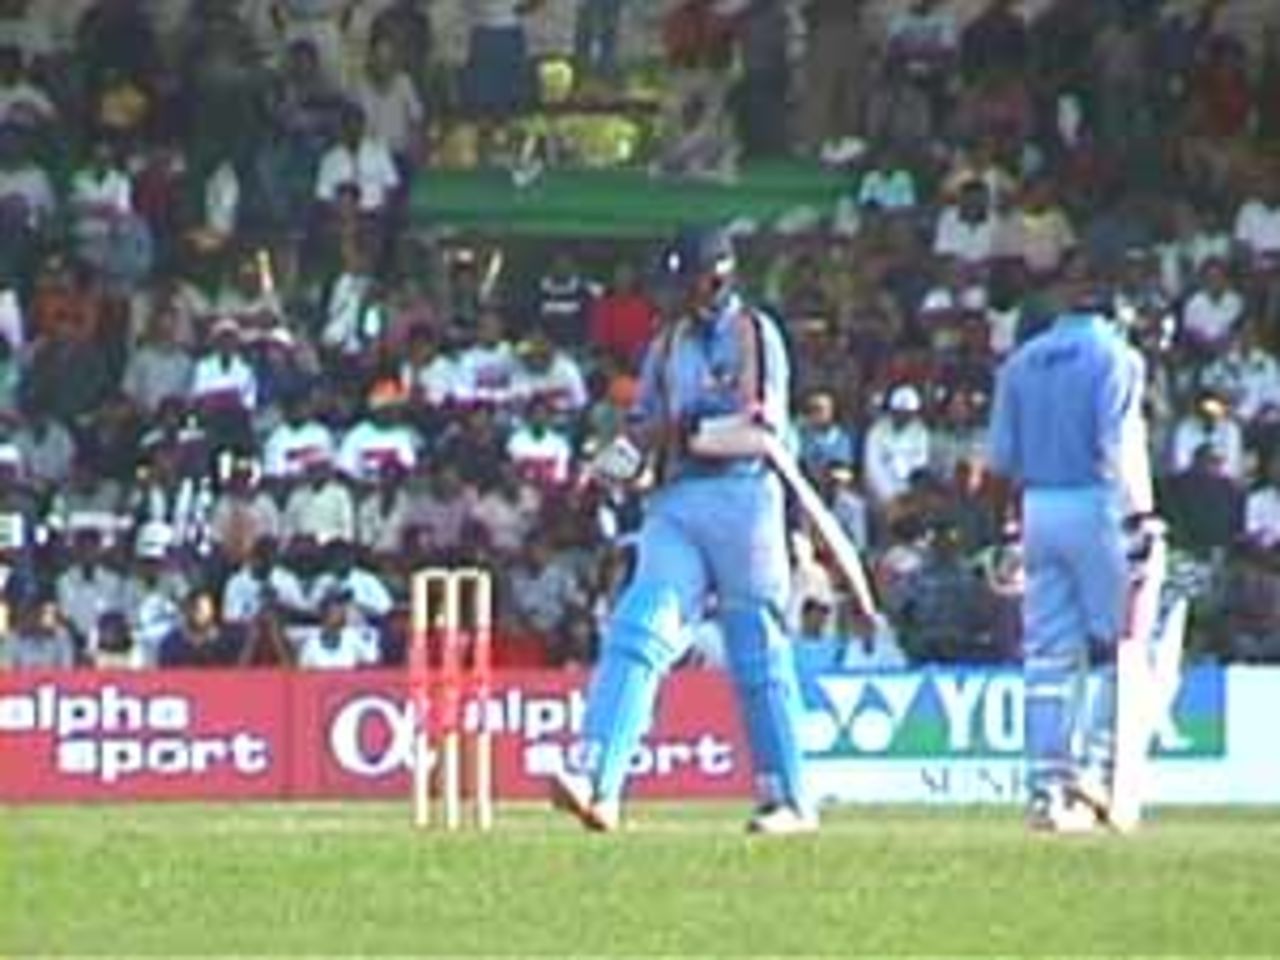 Rahul Dravid departs, India v West Indies (3rd ODI), Coca-Cola Singapore Challenge, 1999-2000, Kallang Ground, Singapore, 5 Sep 1999.